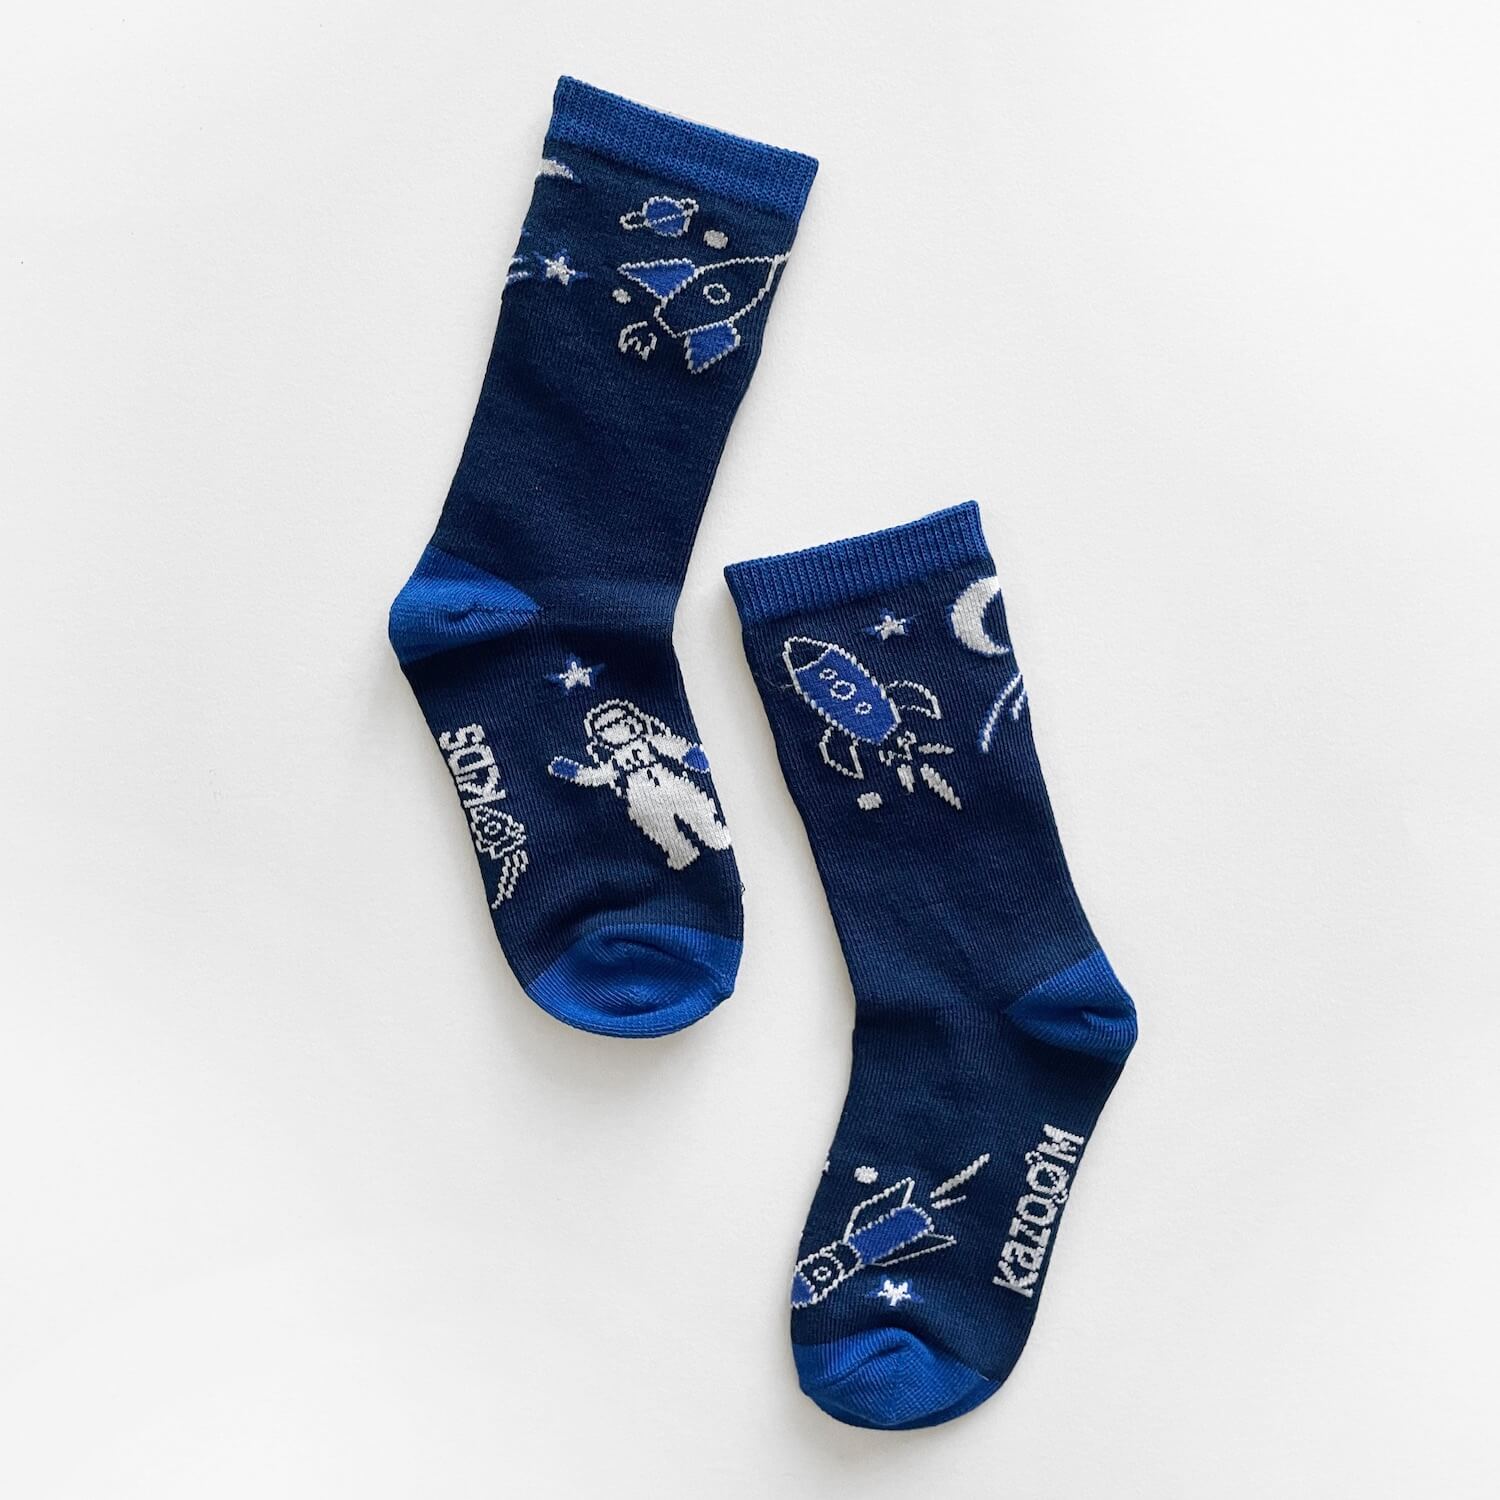 Kid Socks with Grips on the bottom - Blue Space Ship Socks